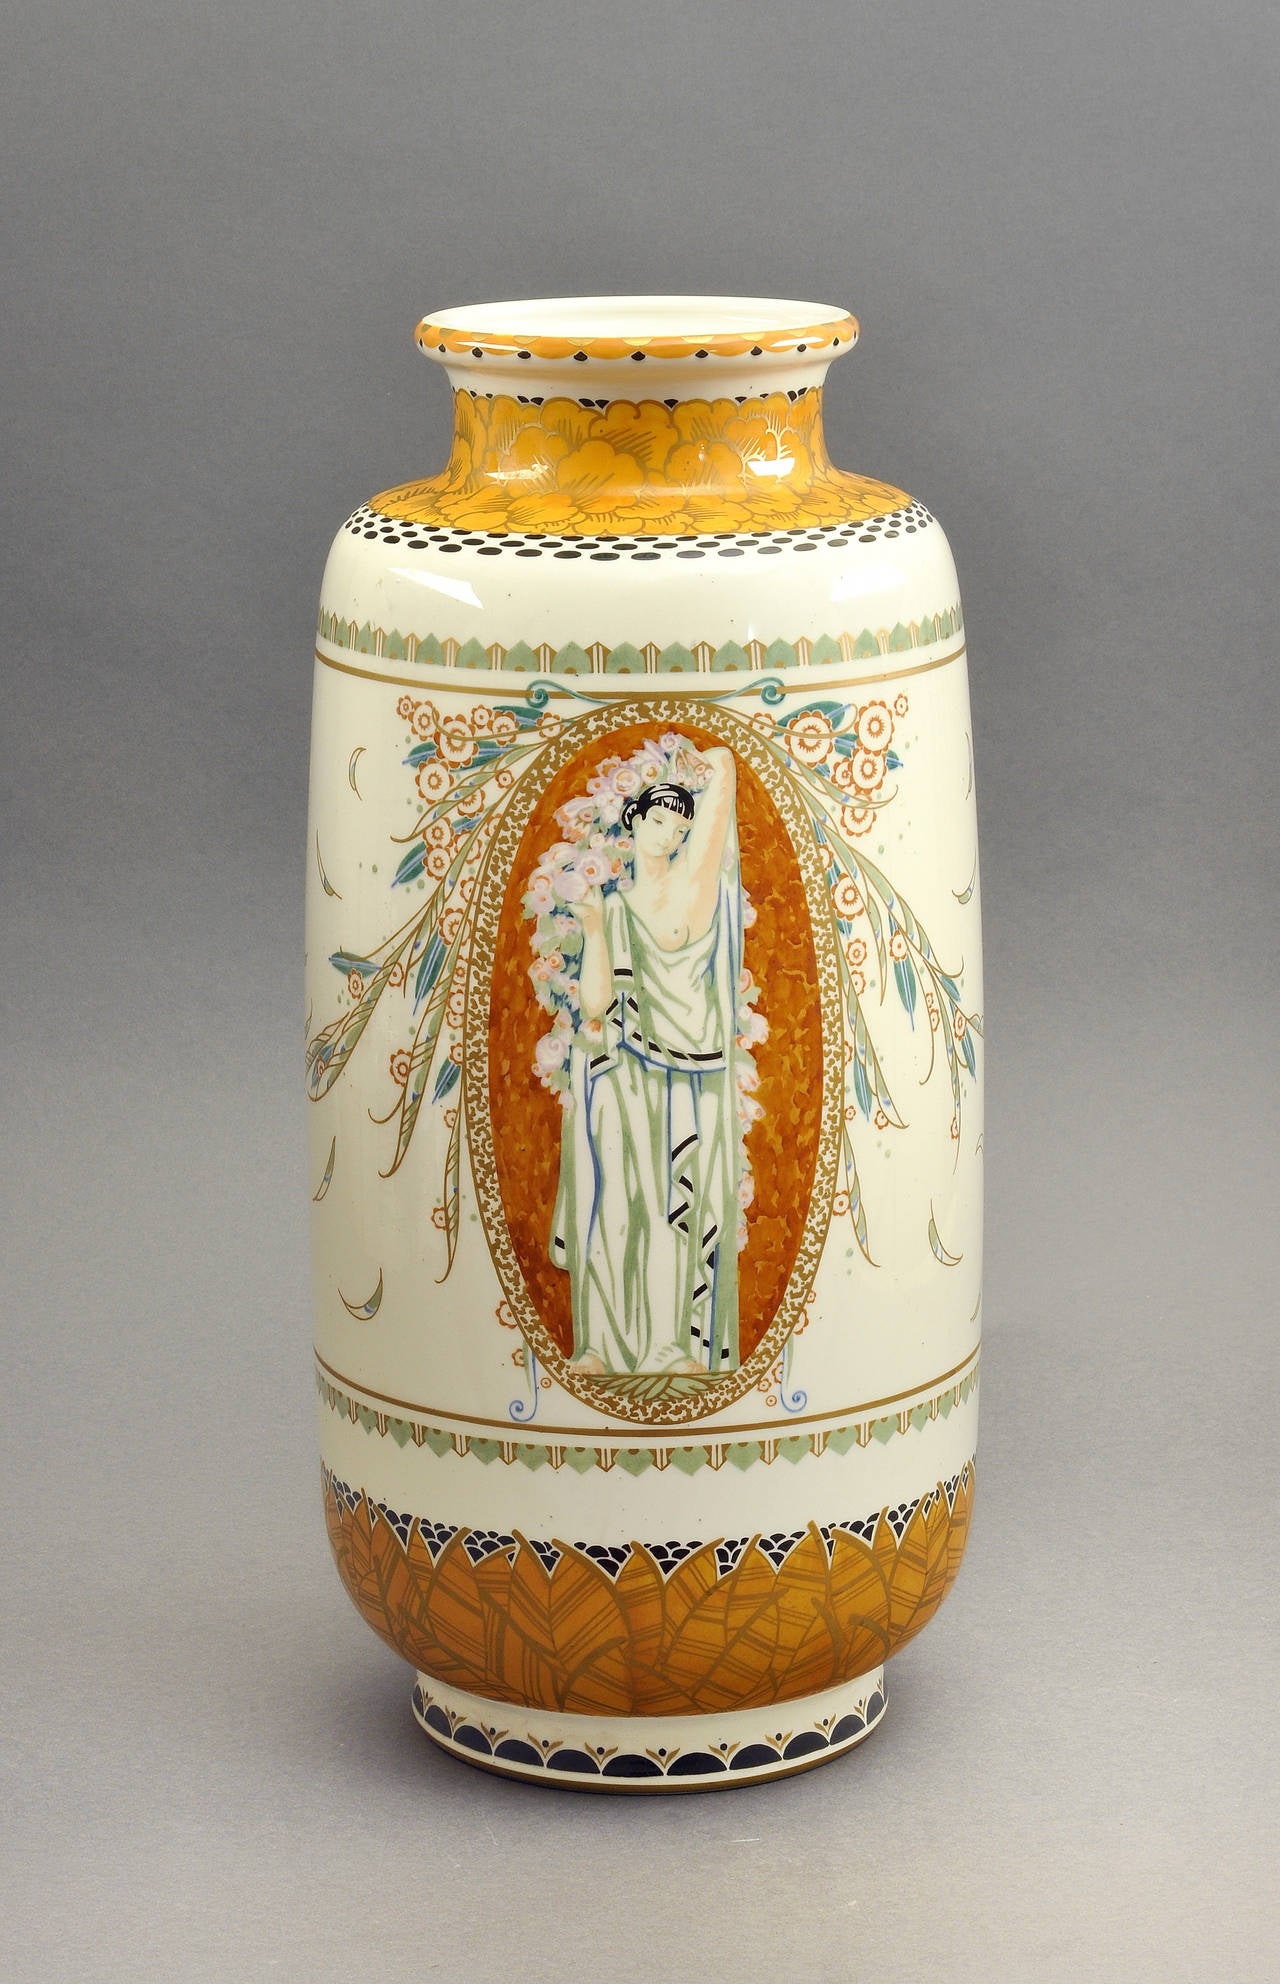 French Highly Important 1924 Manufacture Nationale de Sèvres Porcelain Vase For Sale